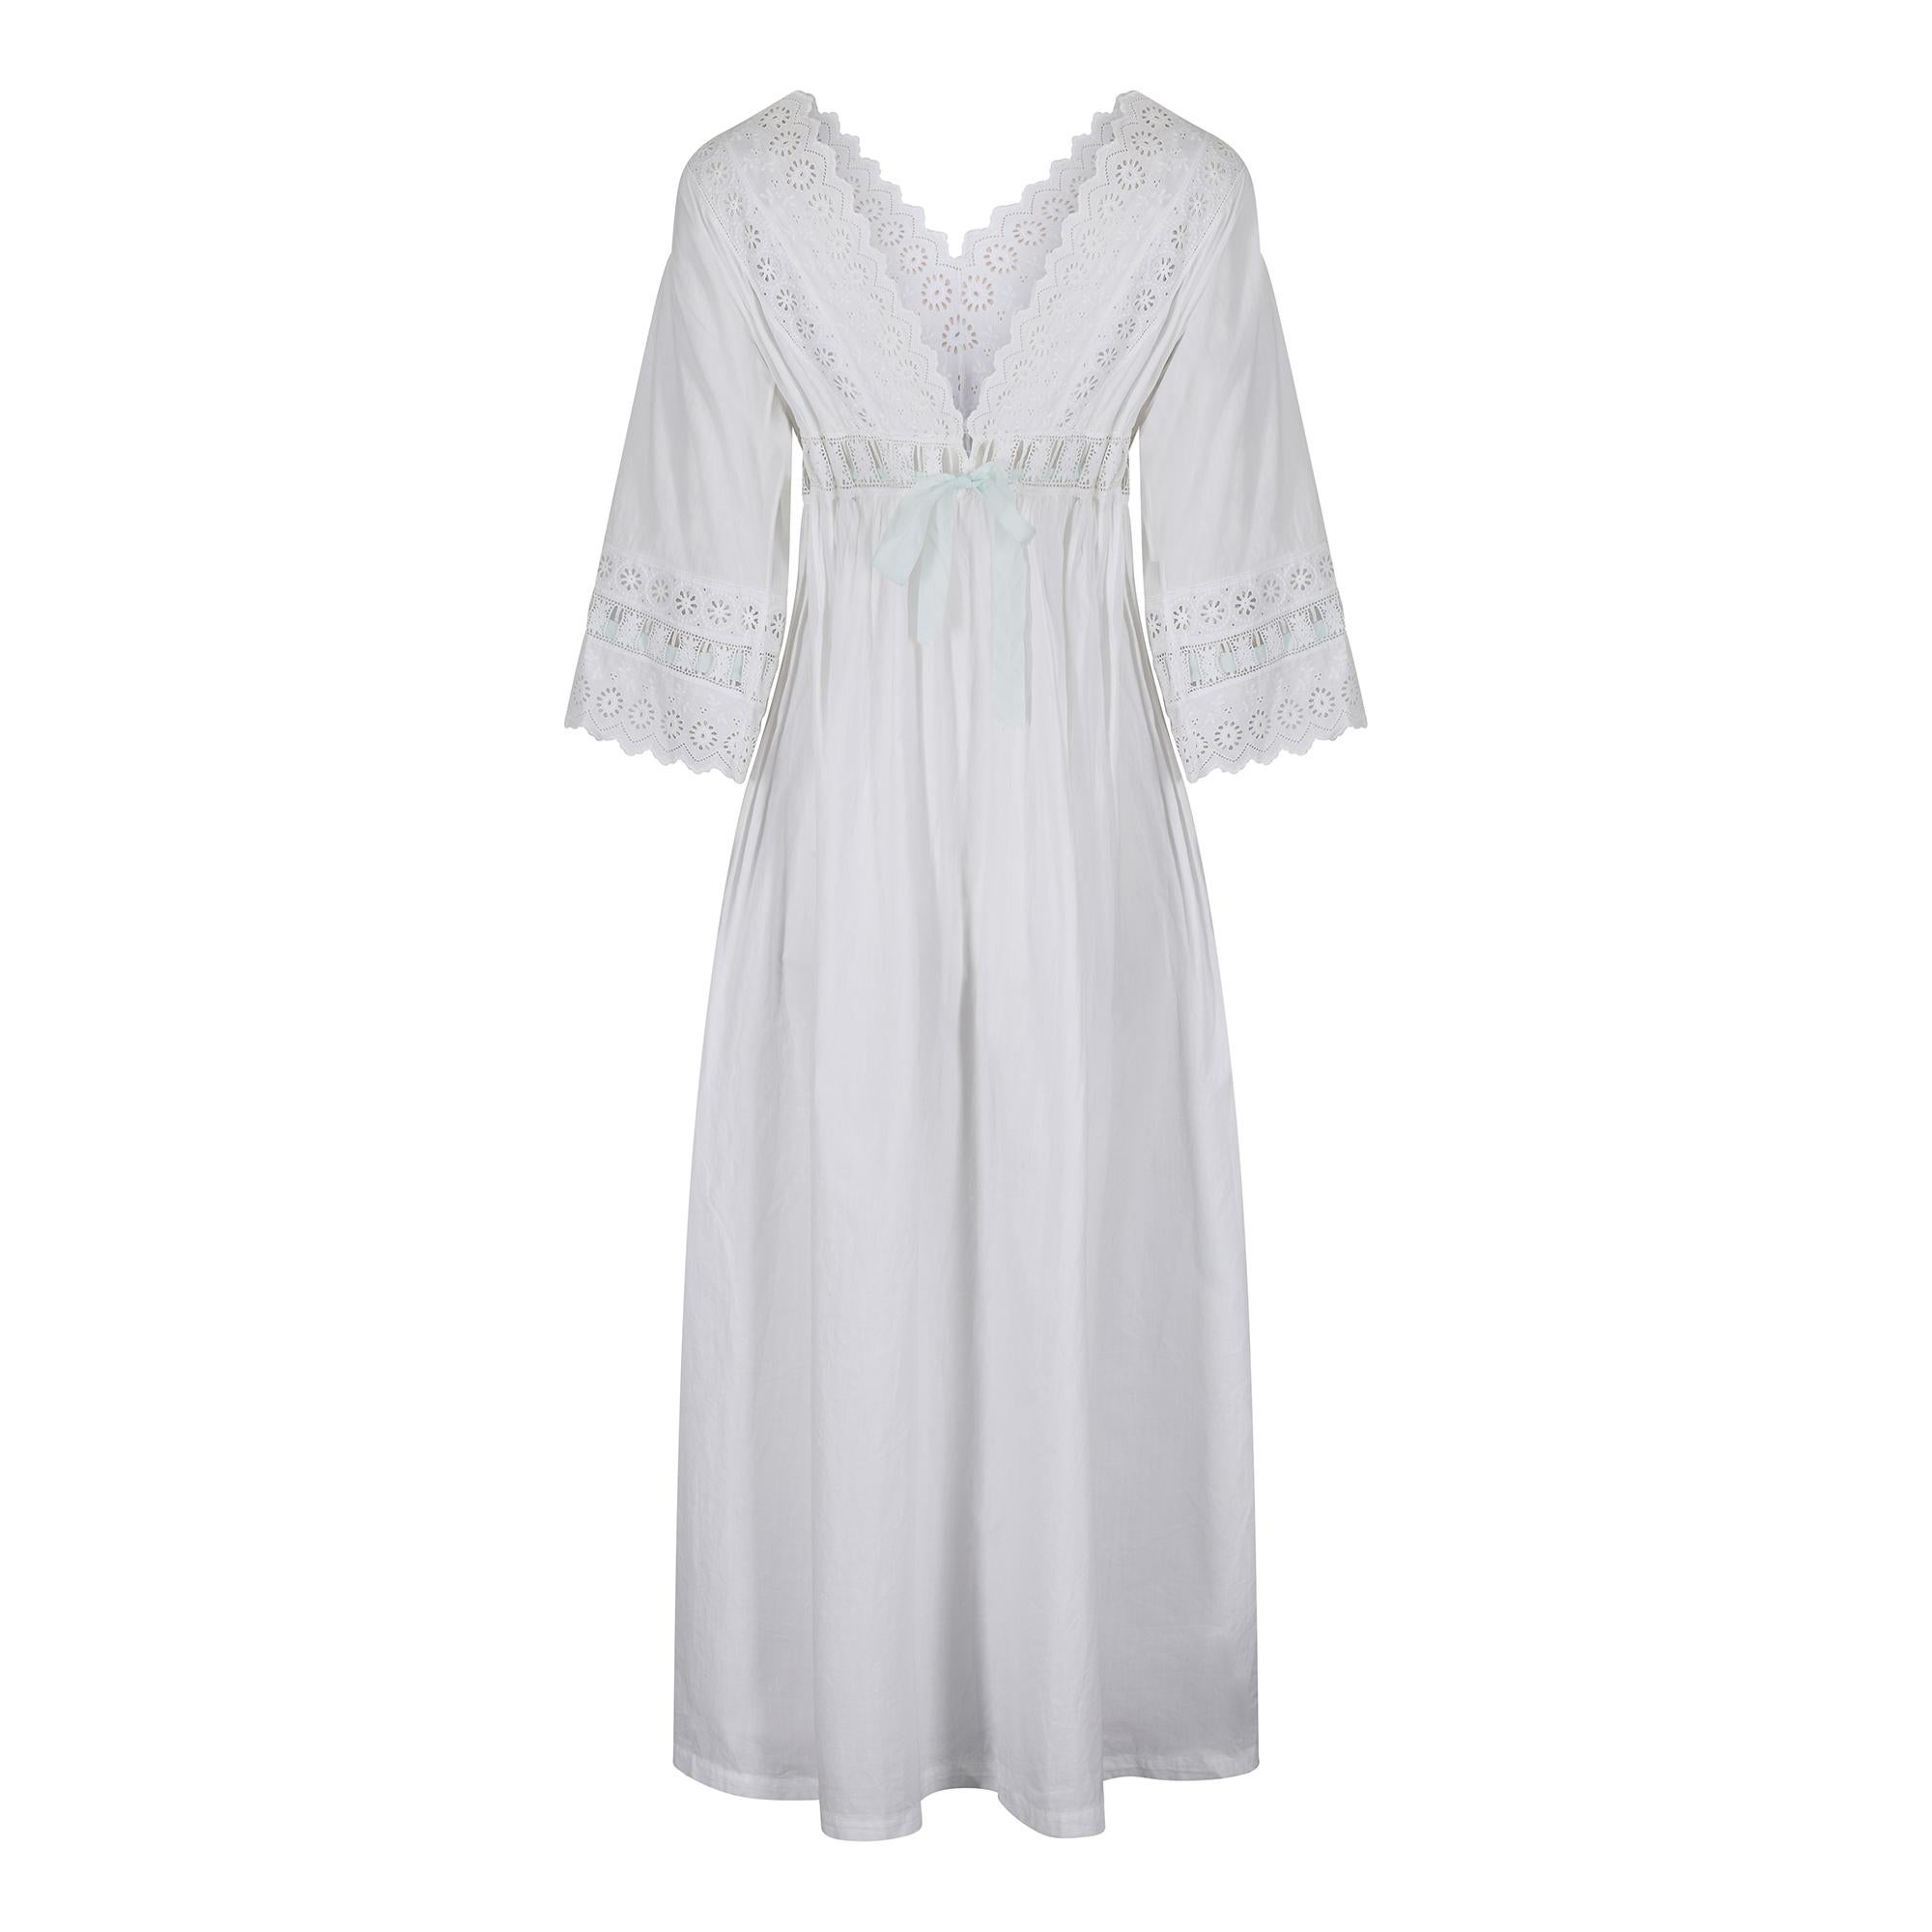 Gray 1920s Whitework Dress